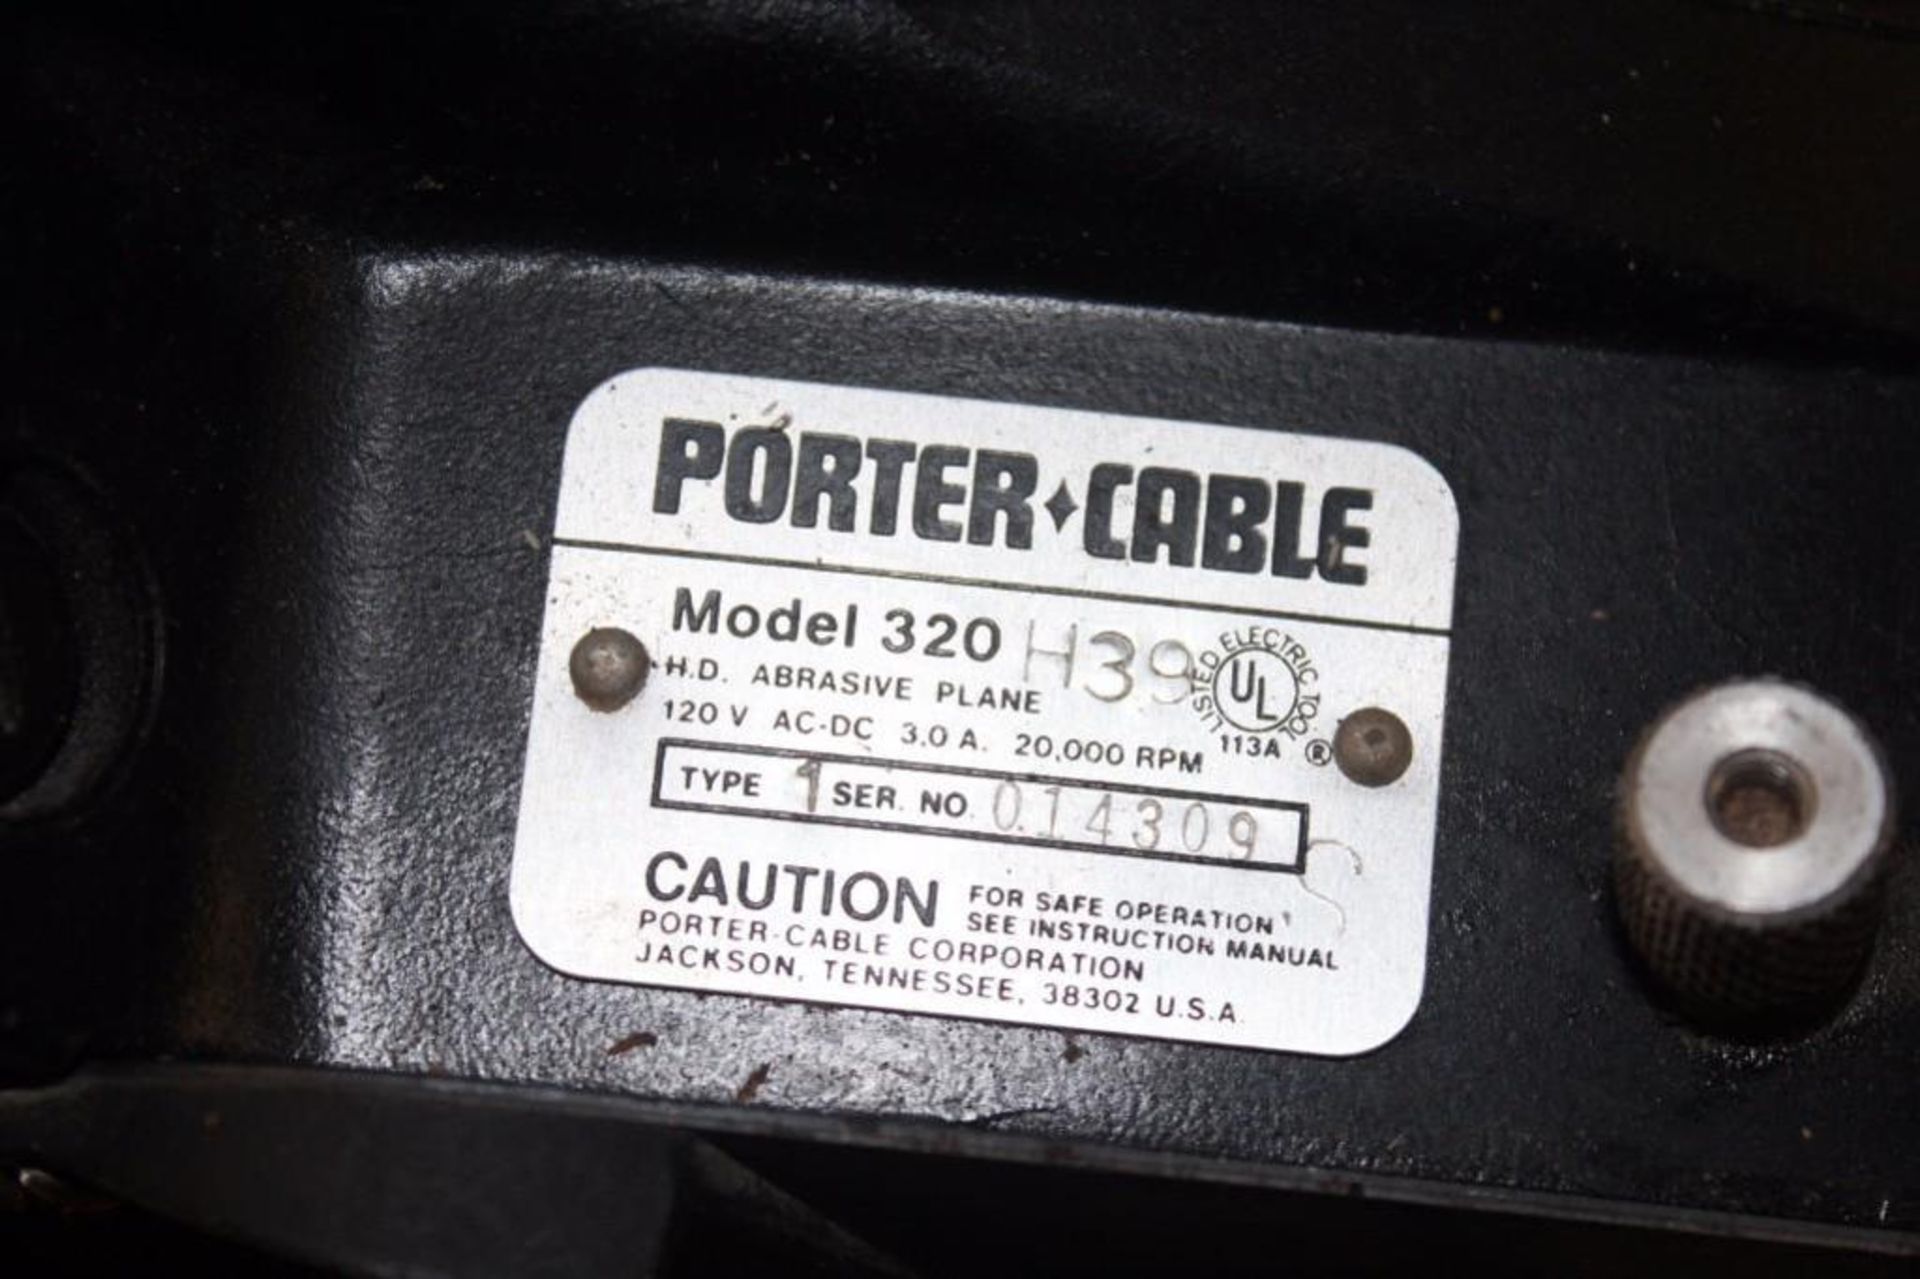 Porter Cable model 320 abrasive planer - Image 3 of 3